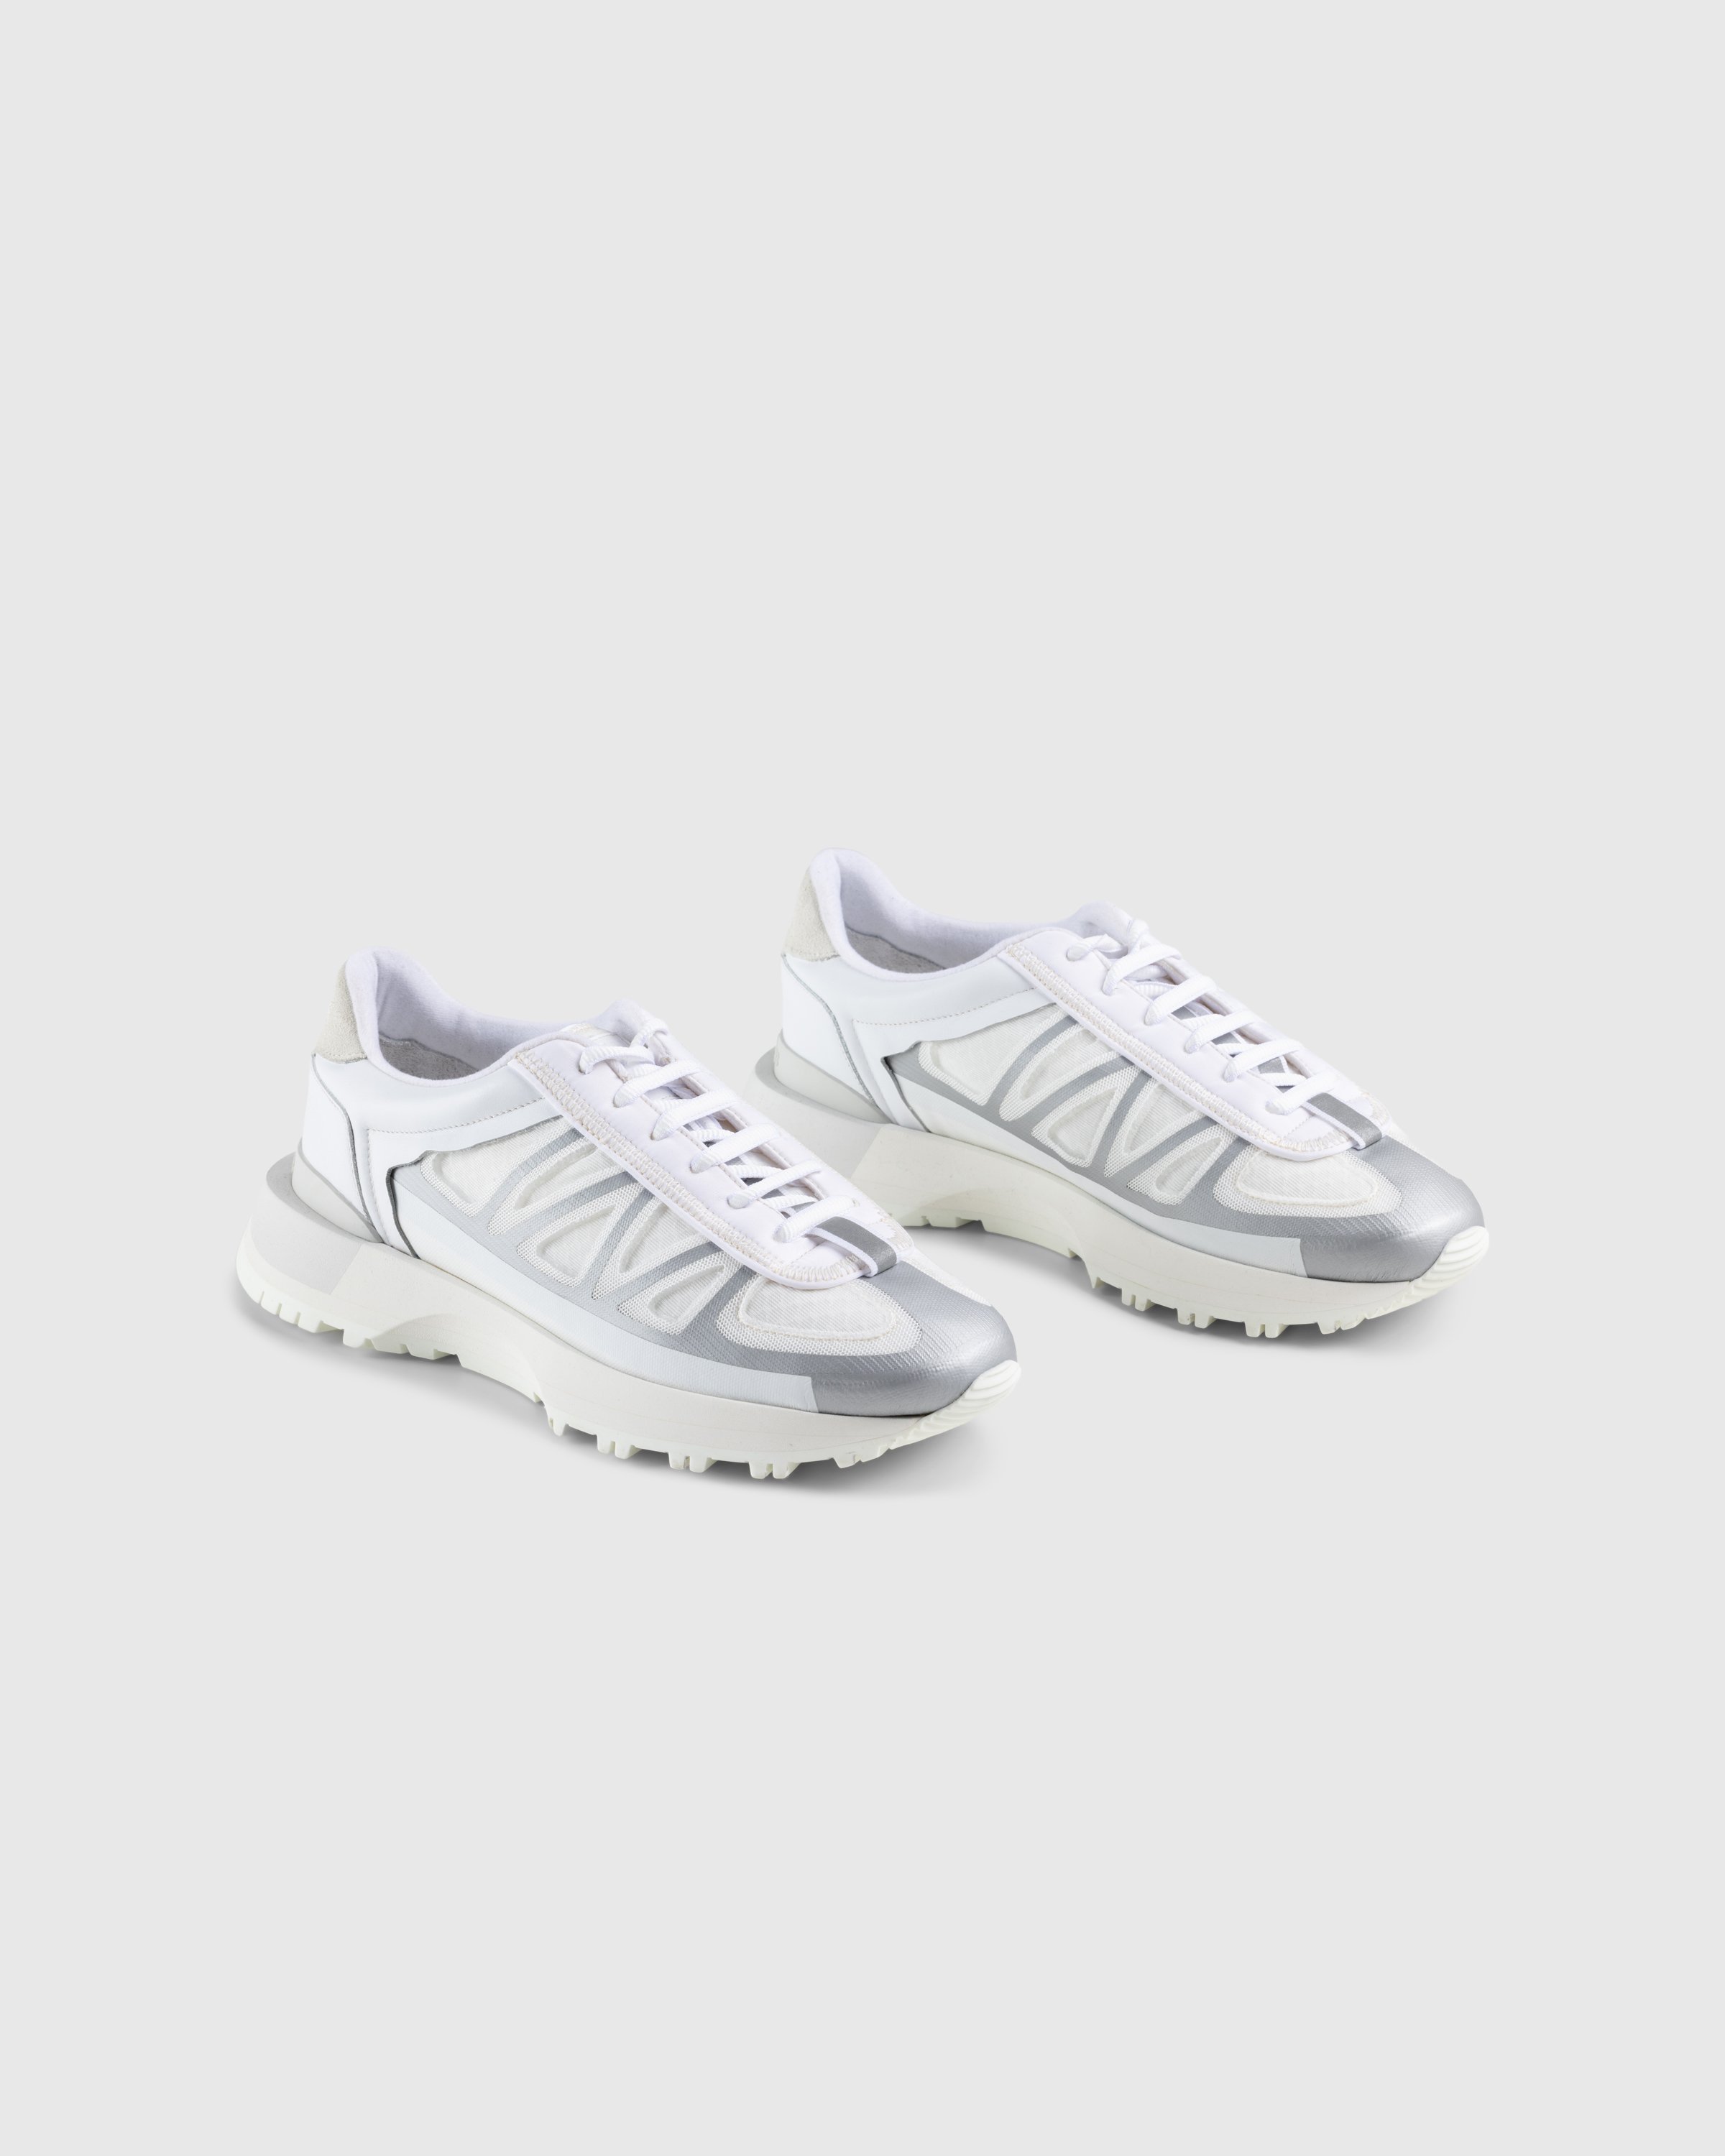 Maison Margiela - 50/50 Sneakers White - Footwear - White - Image 3